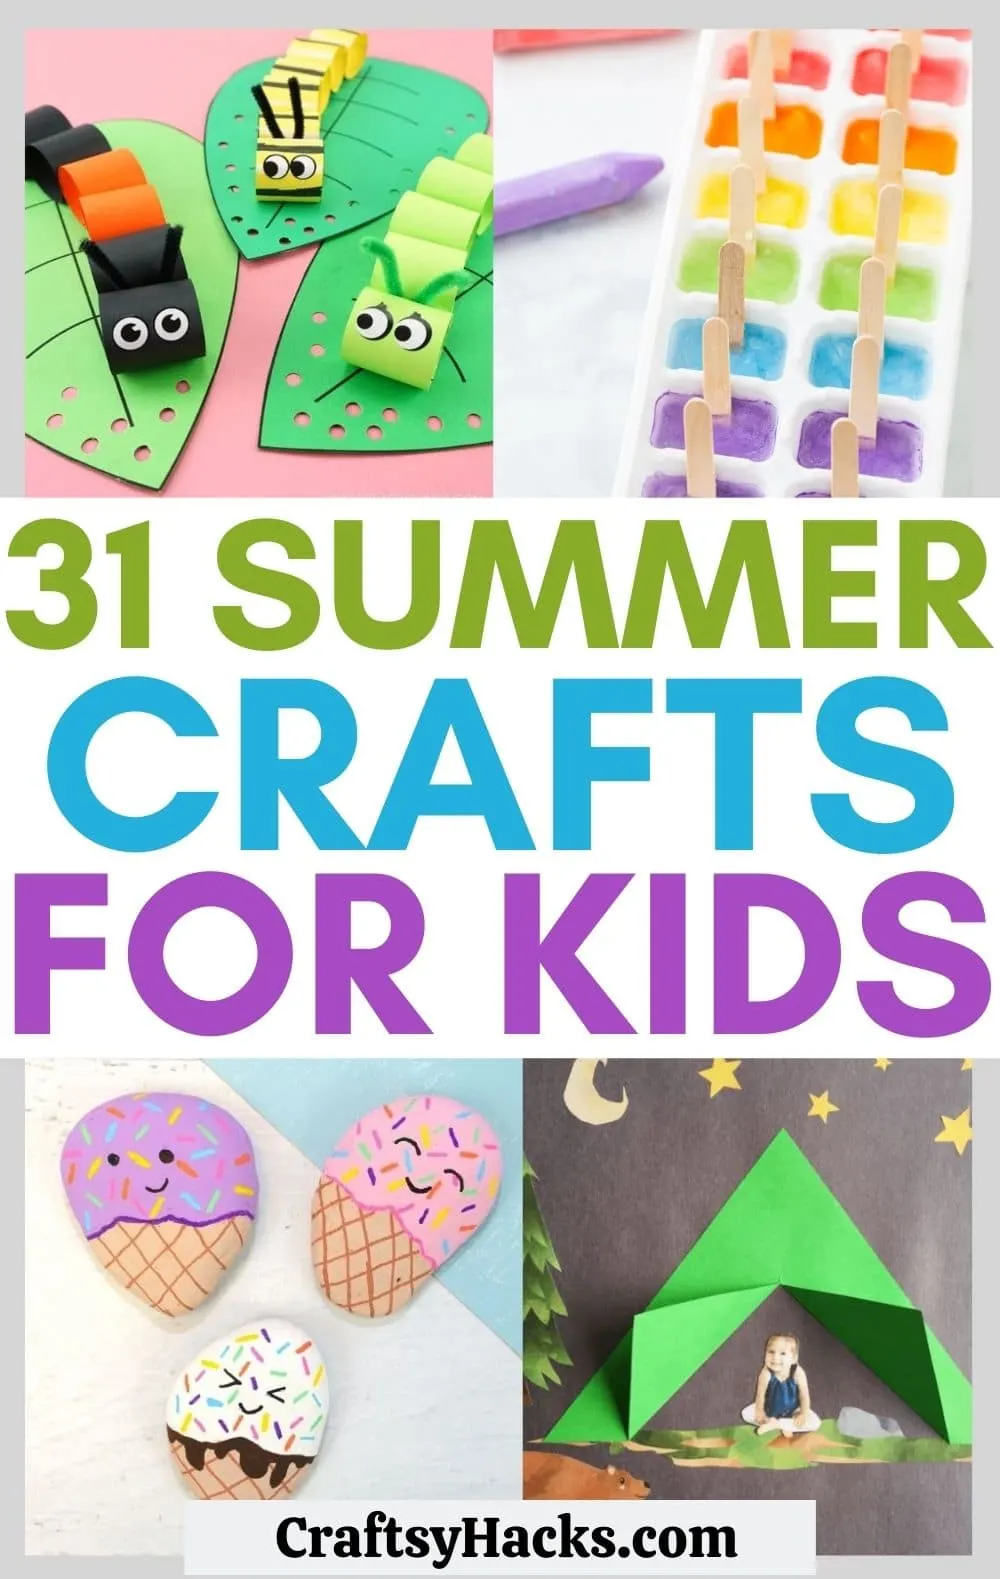 Best Summer Crafts for Kids